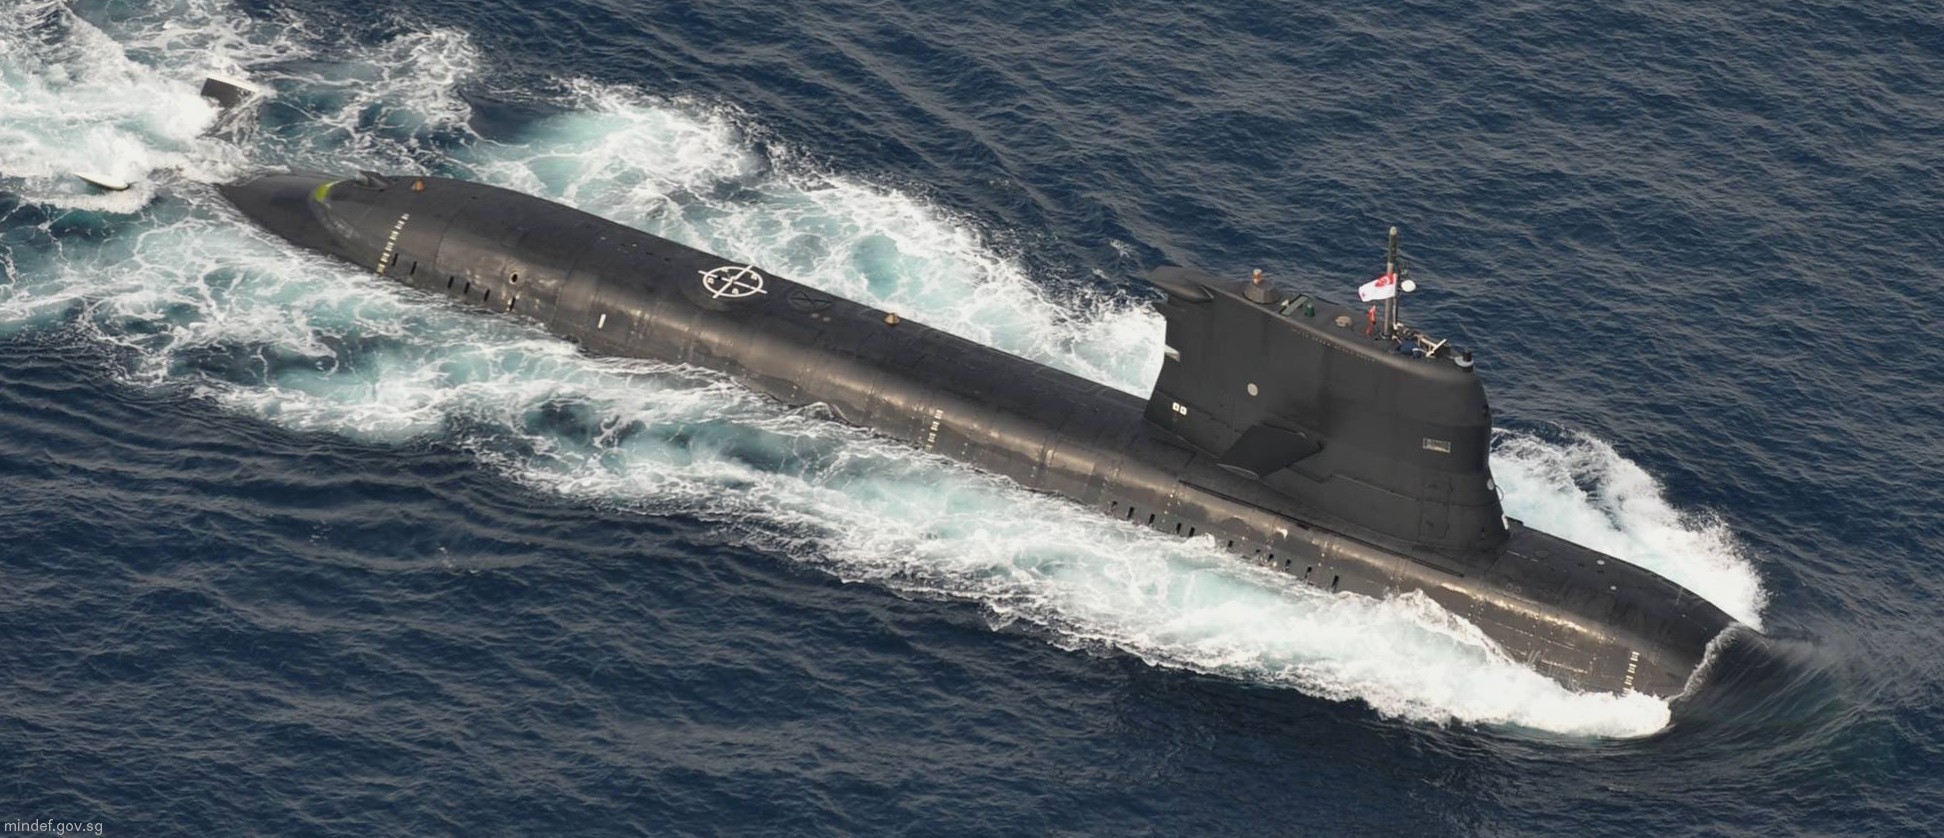 challenger class attack submarine rss conqueror chieftain centurion republic singapore navy 06x